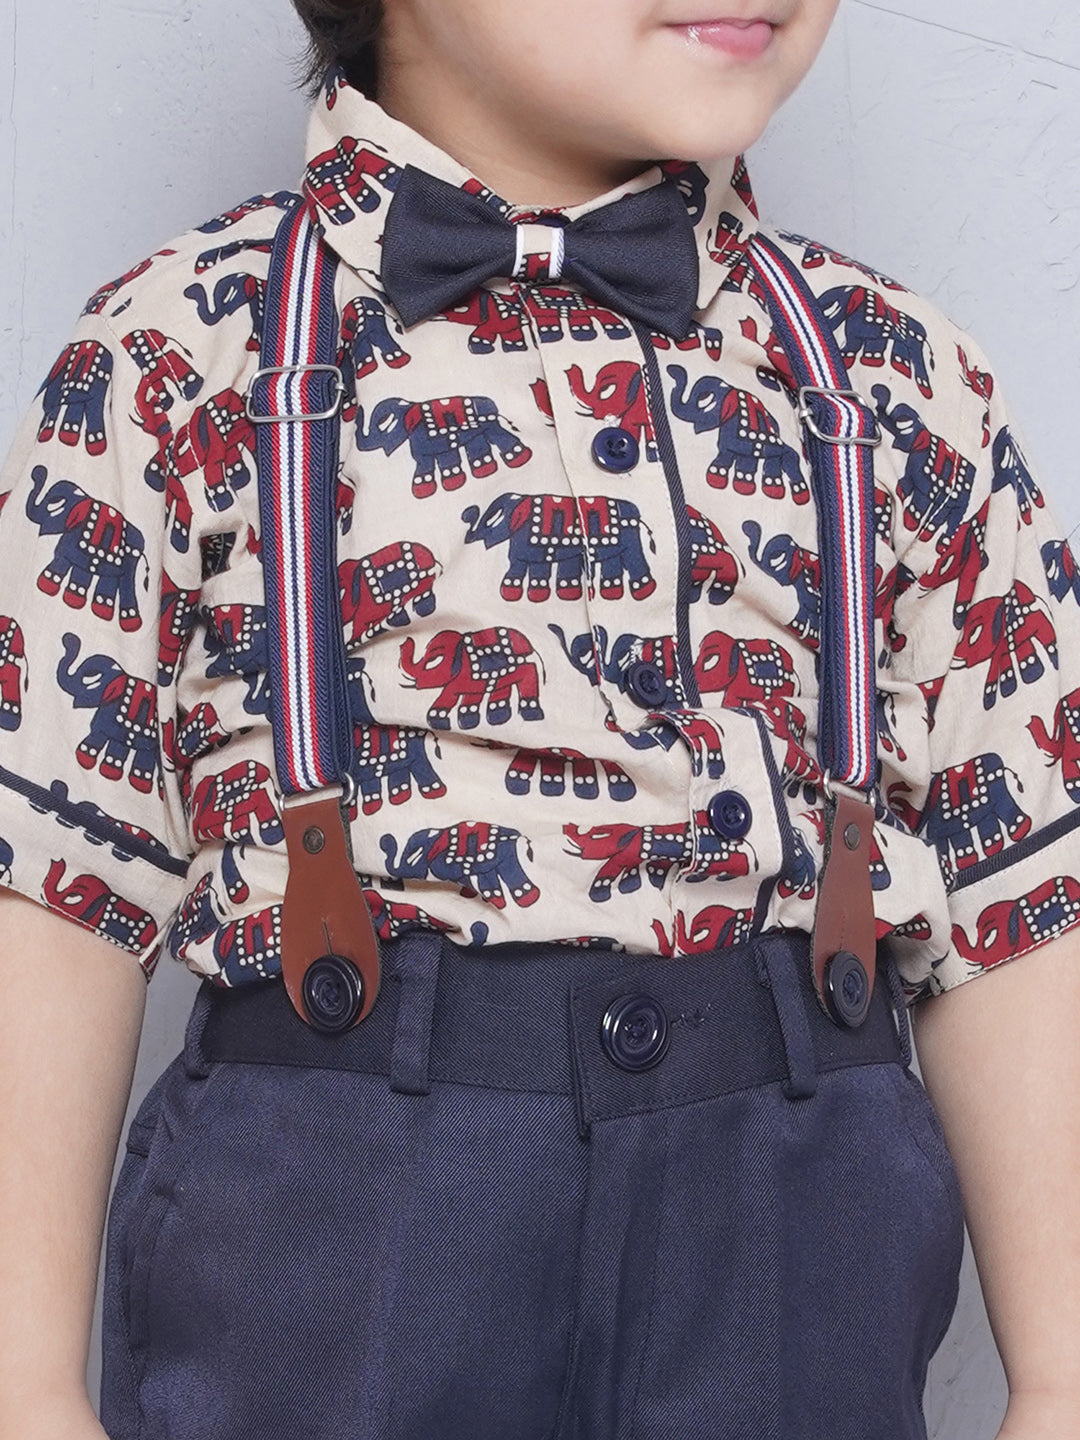 Beige Kids Cotton Blend Animal Print Shirt Shorts With Suspender Set For Boys